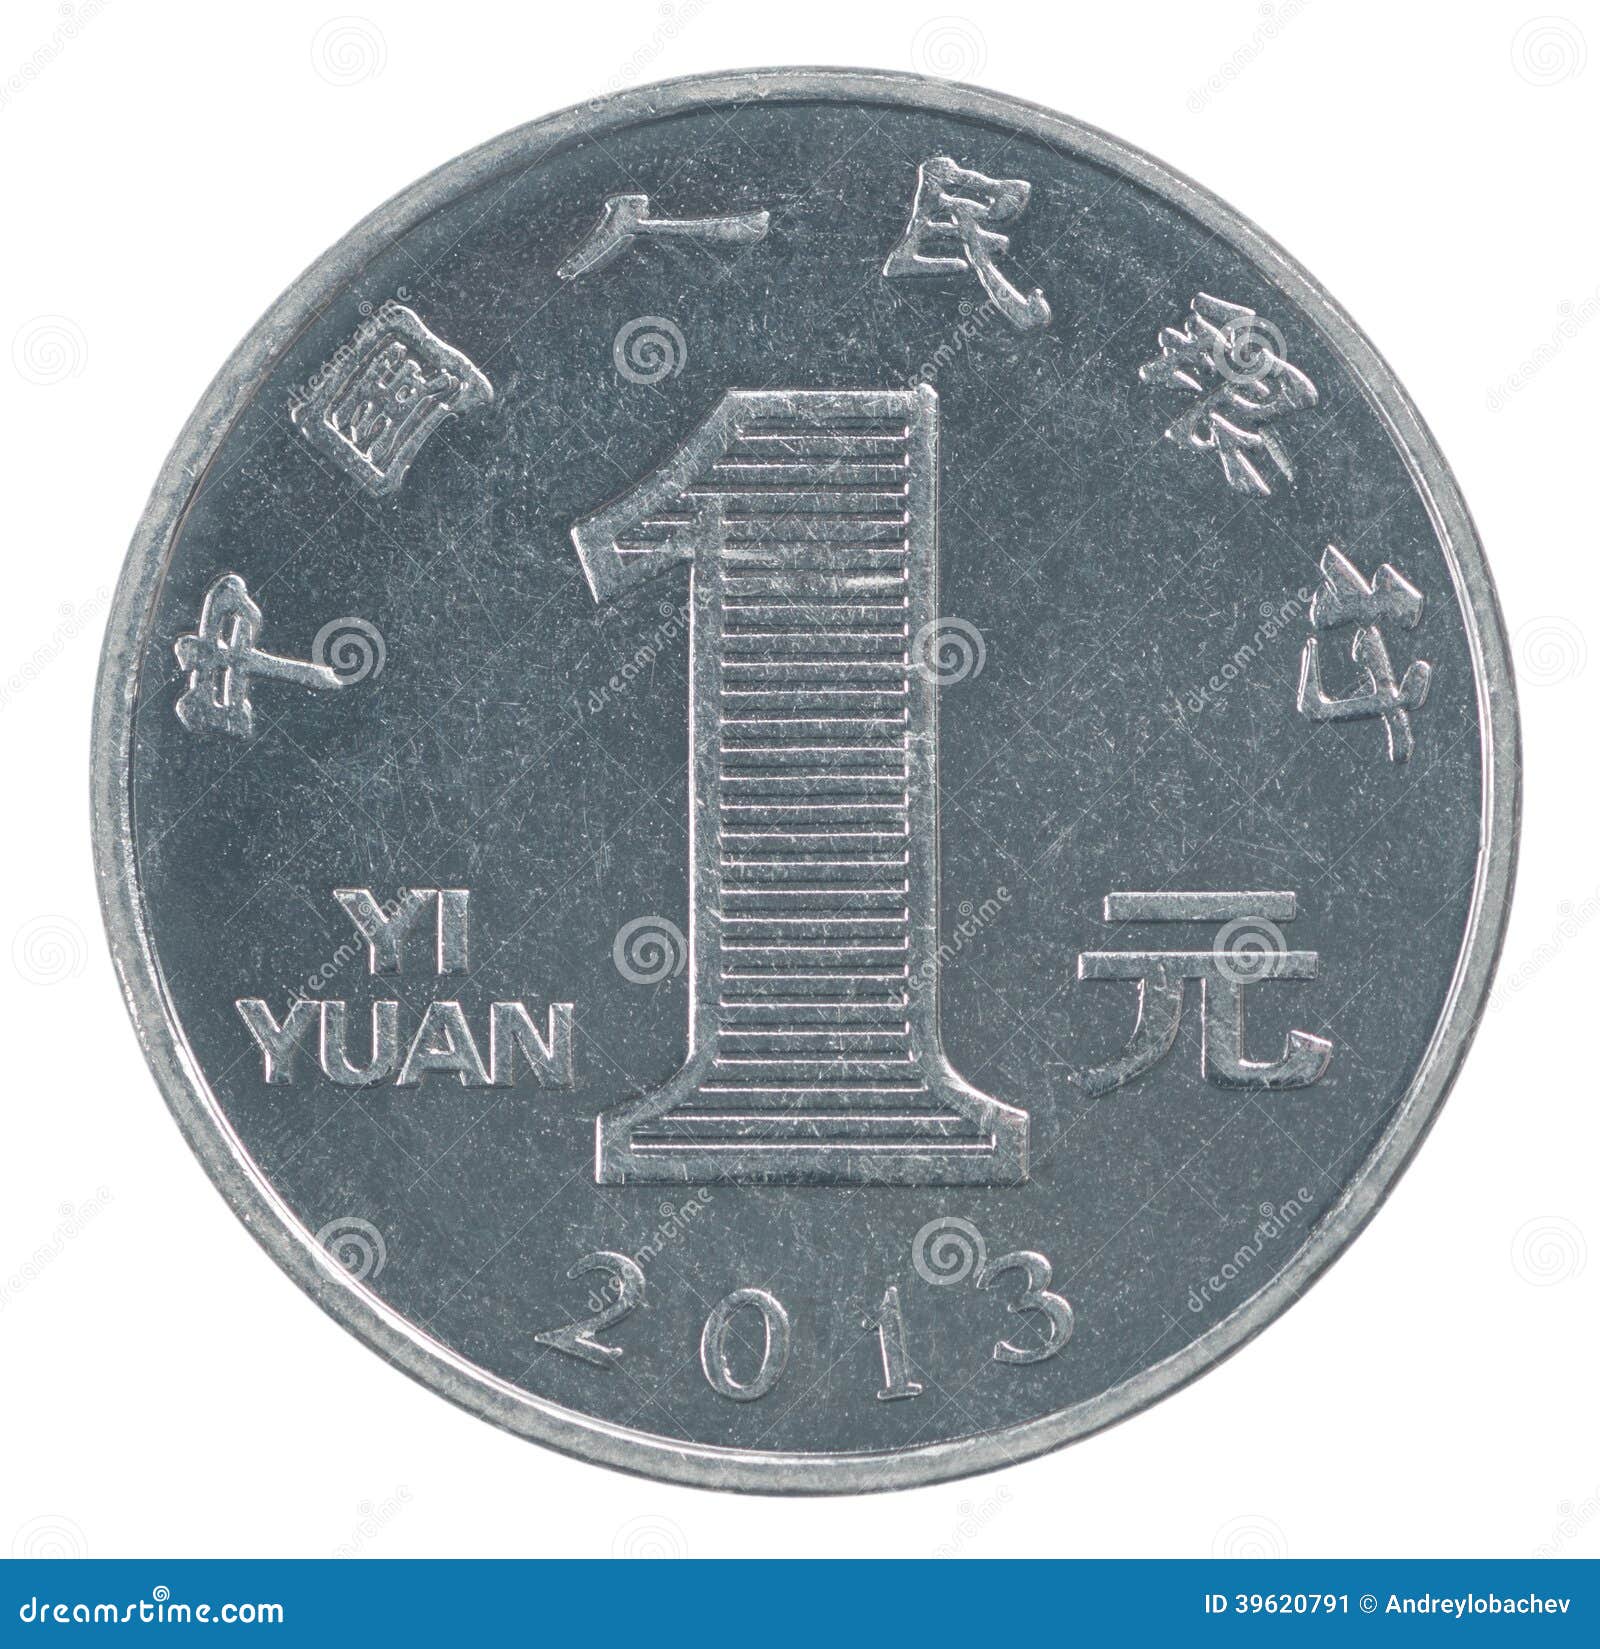 Китайские 5 рублей. 1 Джао 2015 монета. Монеты Китая 1 Цзяо. 1 Юань монета 2015. Монеты Китая 1 юань.